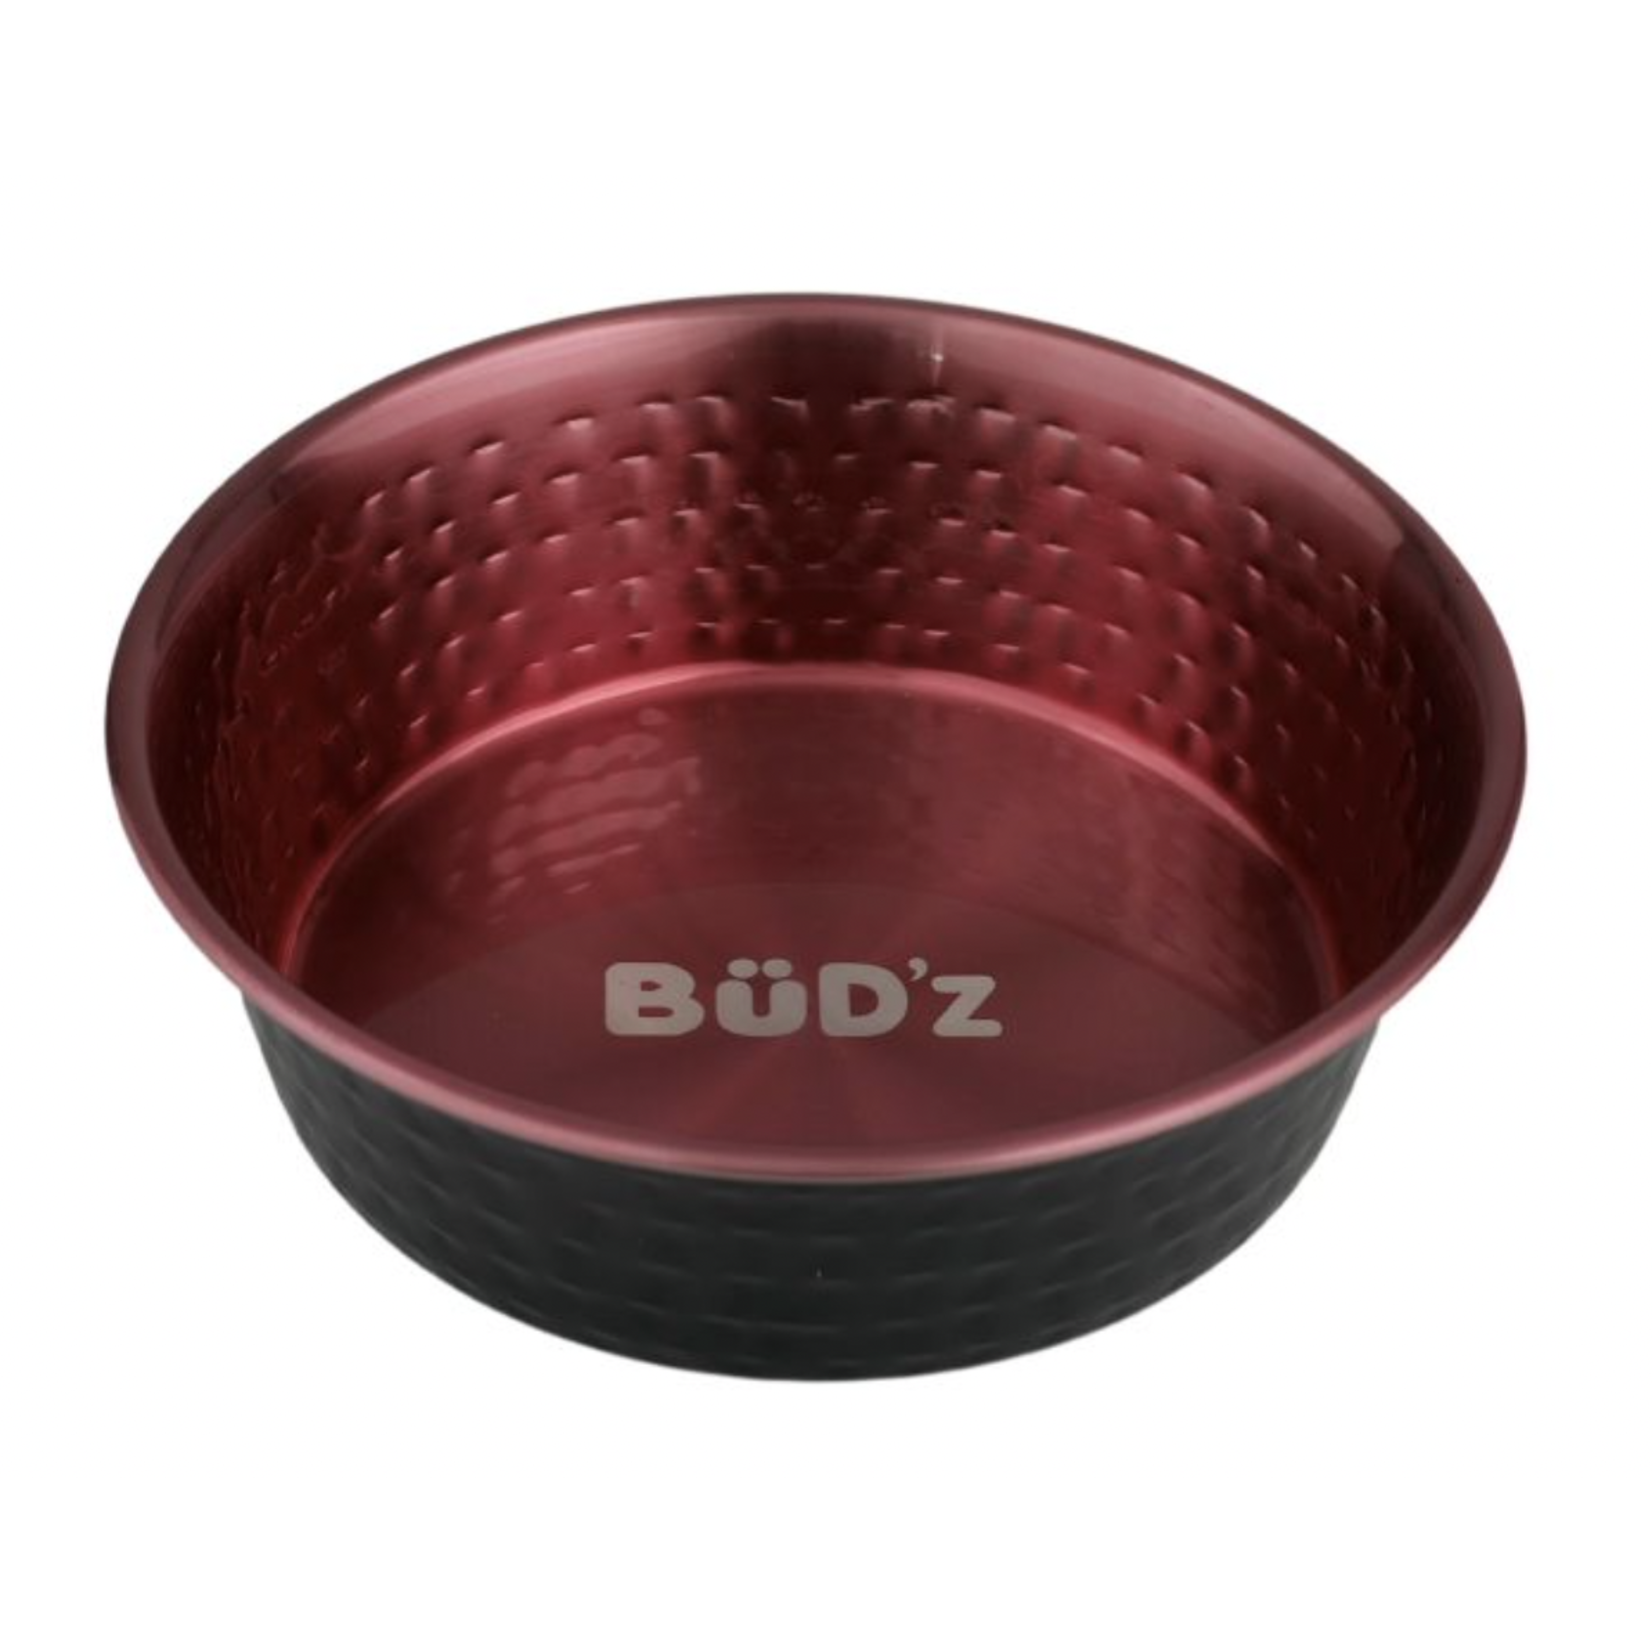 BUD-Z BUD'Z STAINLESS STEEL BOWL, HAMMERED INTERIOR - PINK 950ml (32oz)